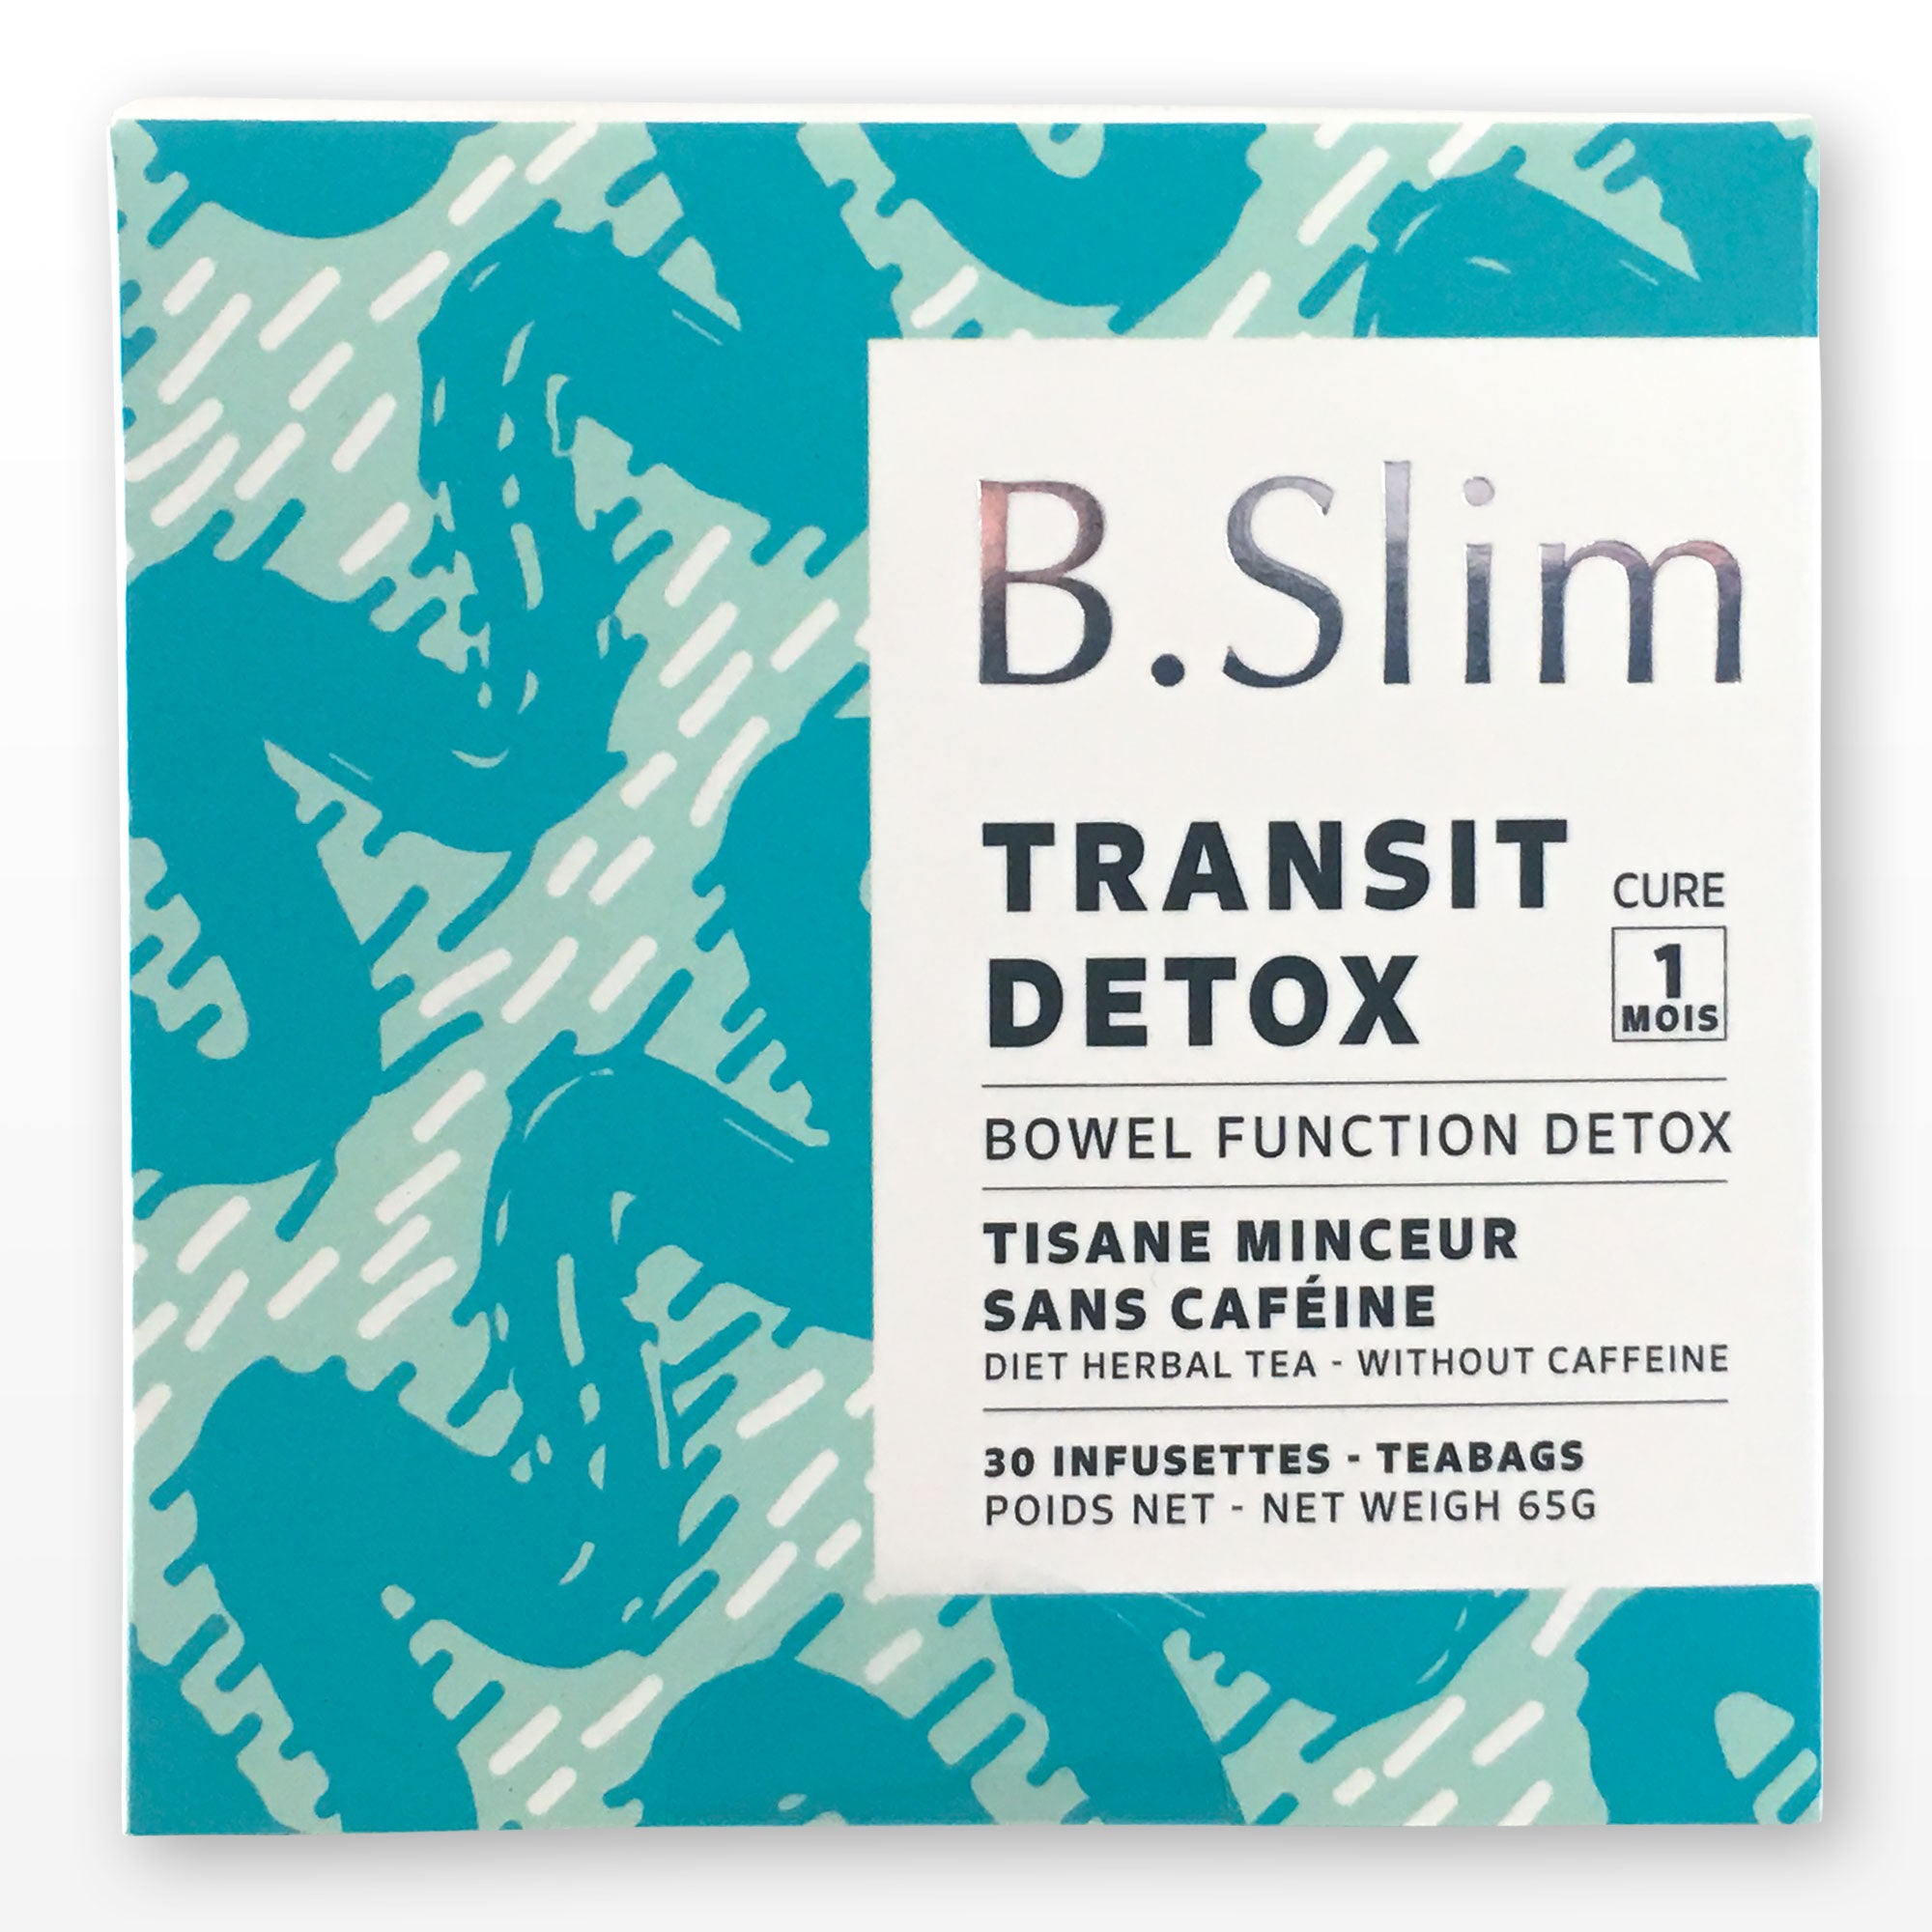 Diet World tisanes minceur b.sLIM transit detox 30 infusettes 65 g